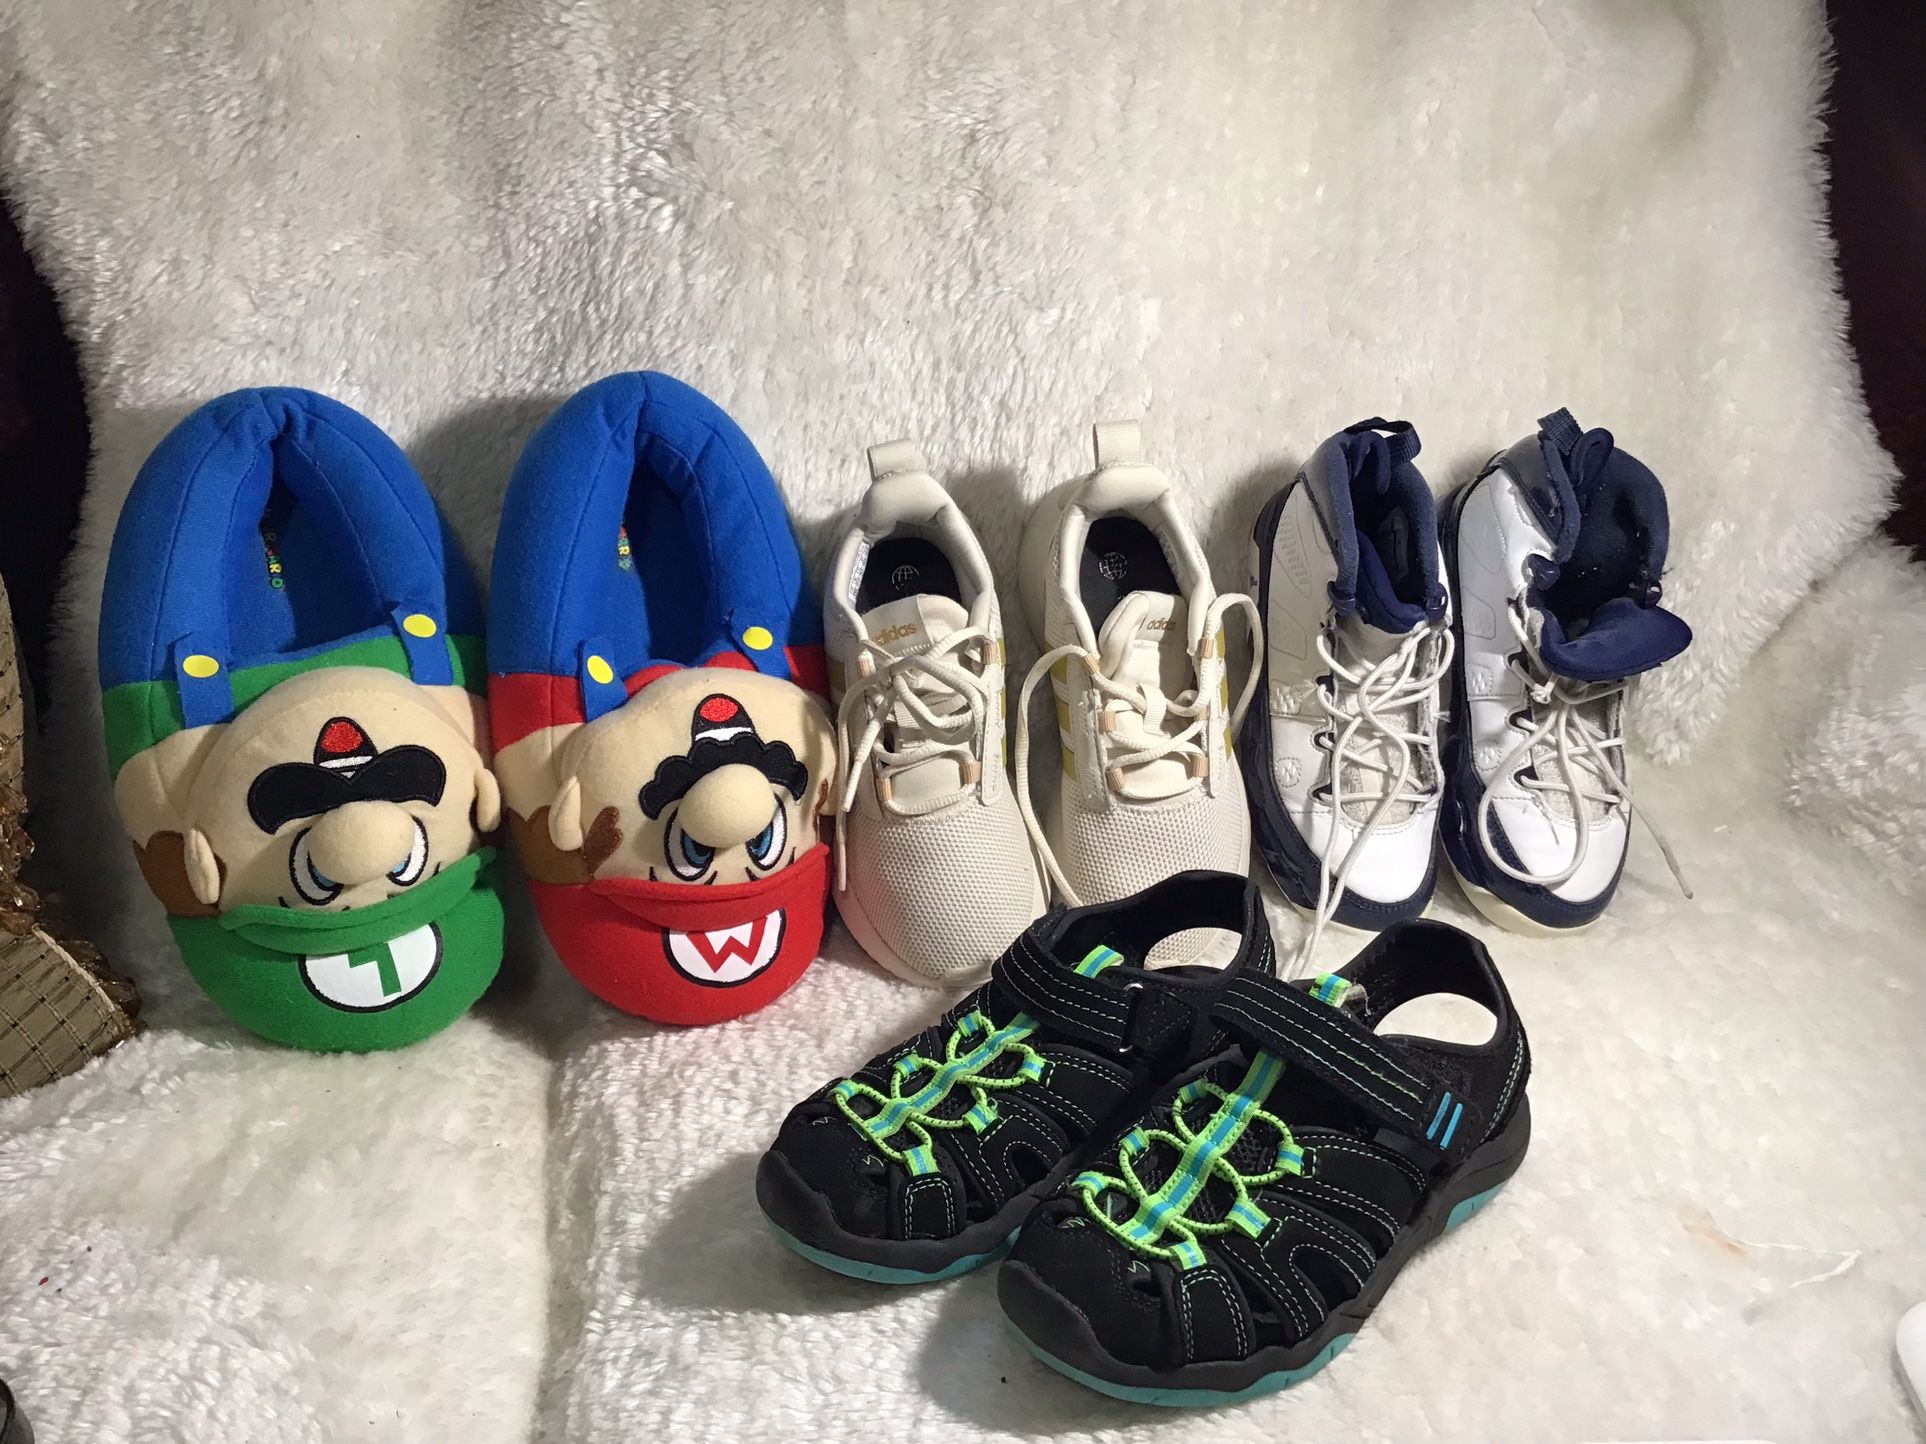 Super Mario Slippers /Adidas /Jordan/Sandals/ Size 13 All $30